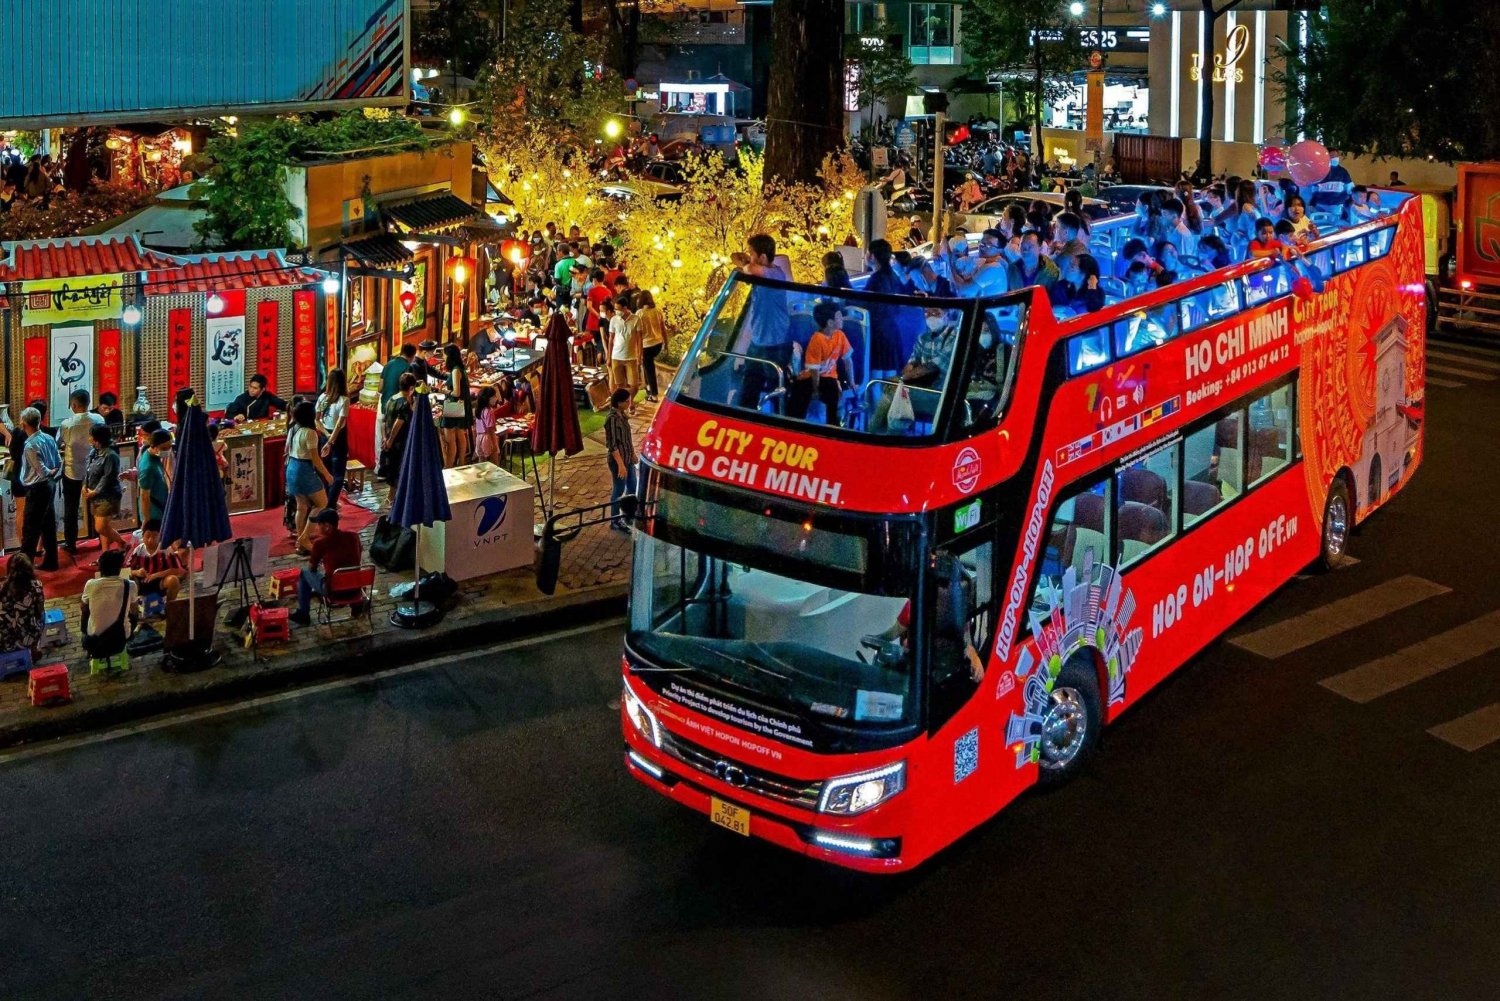 HO CHI MINH CITY: 1 ROUND MIDNIGHT BUS TOUR